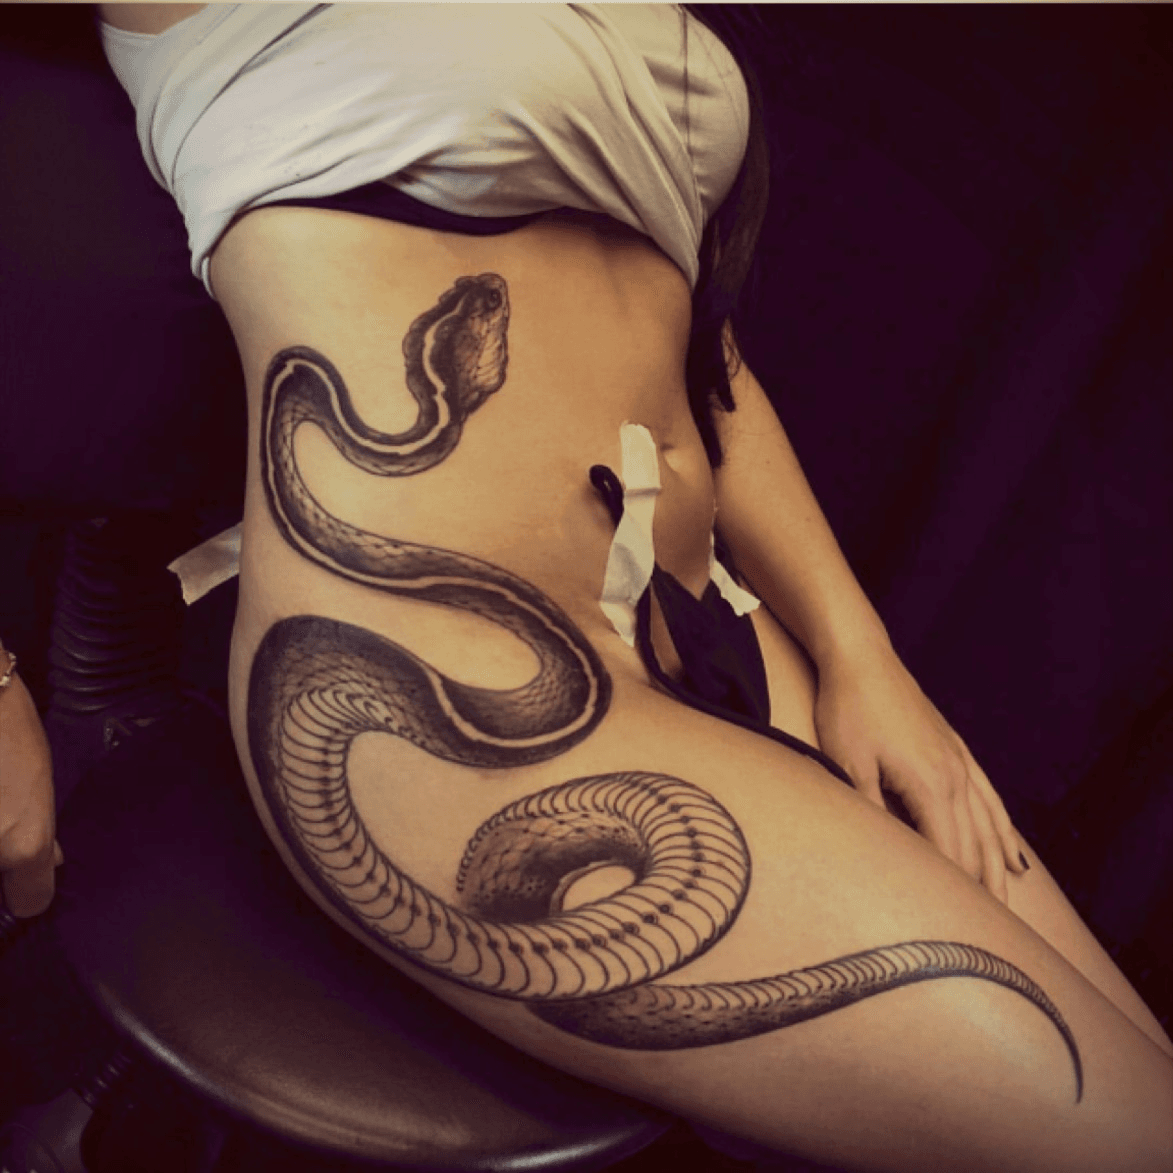 Tattoo Ideas on Twitter Snake amp Roses Hip Tattoo  httpstcogi0YD5RtXn httpstcofuhg6FjJOg  Twitter